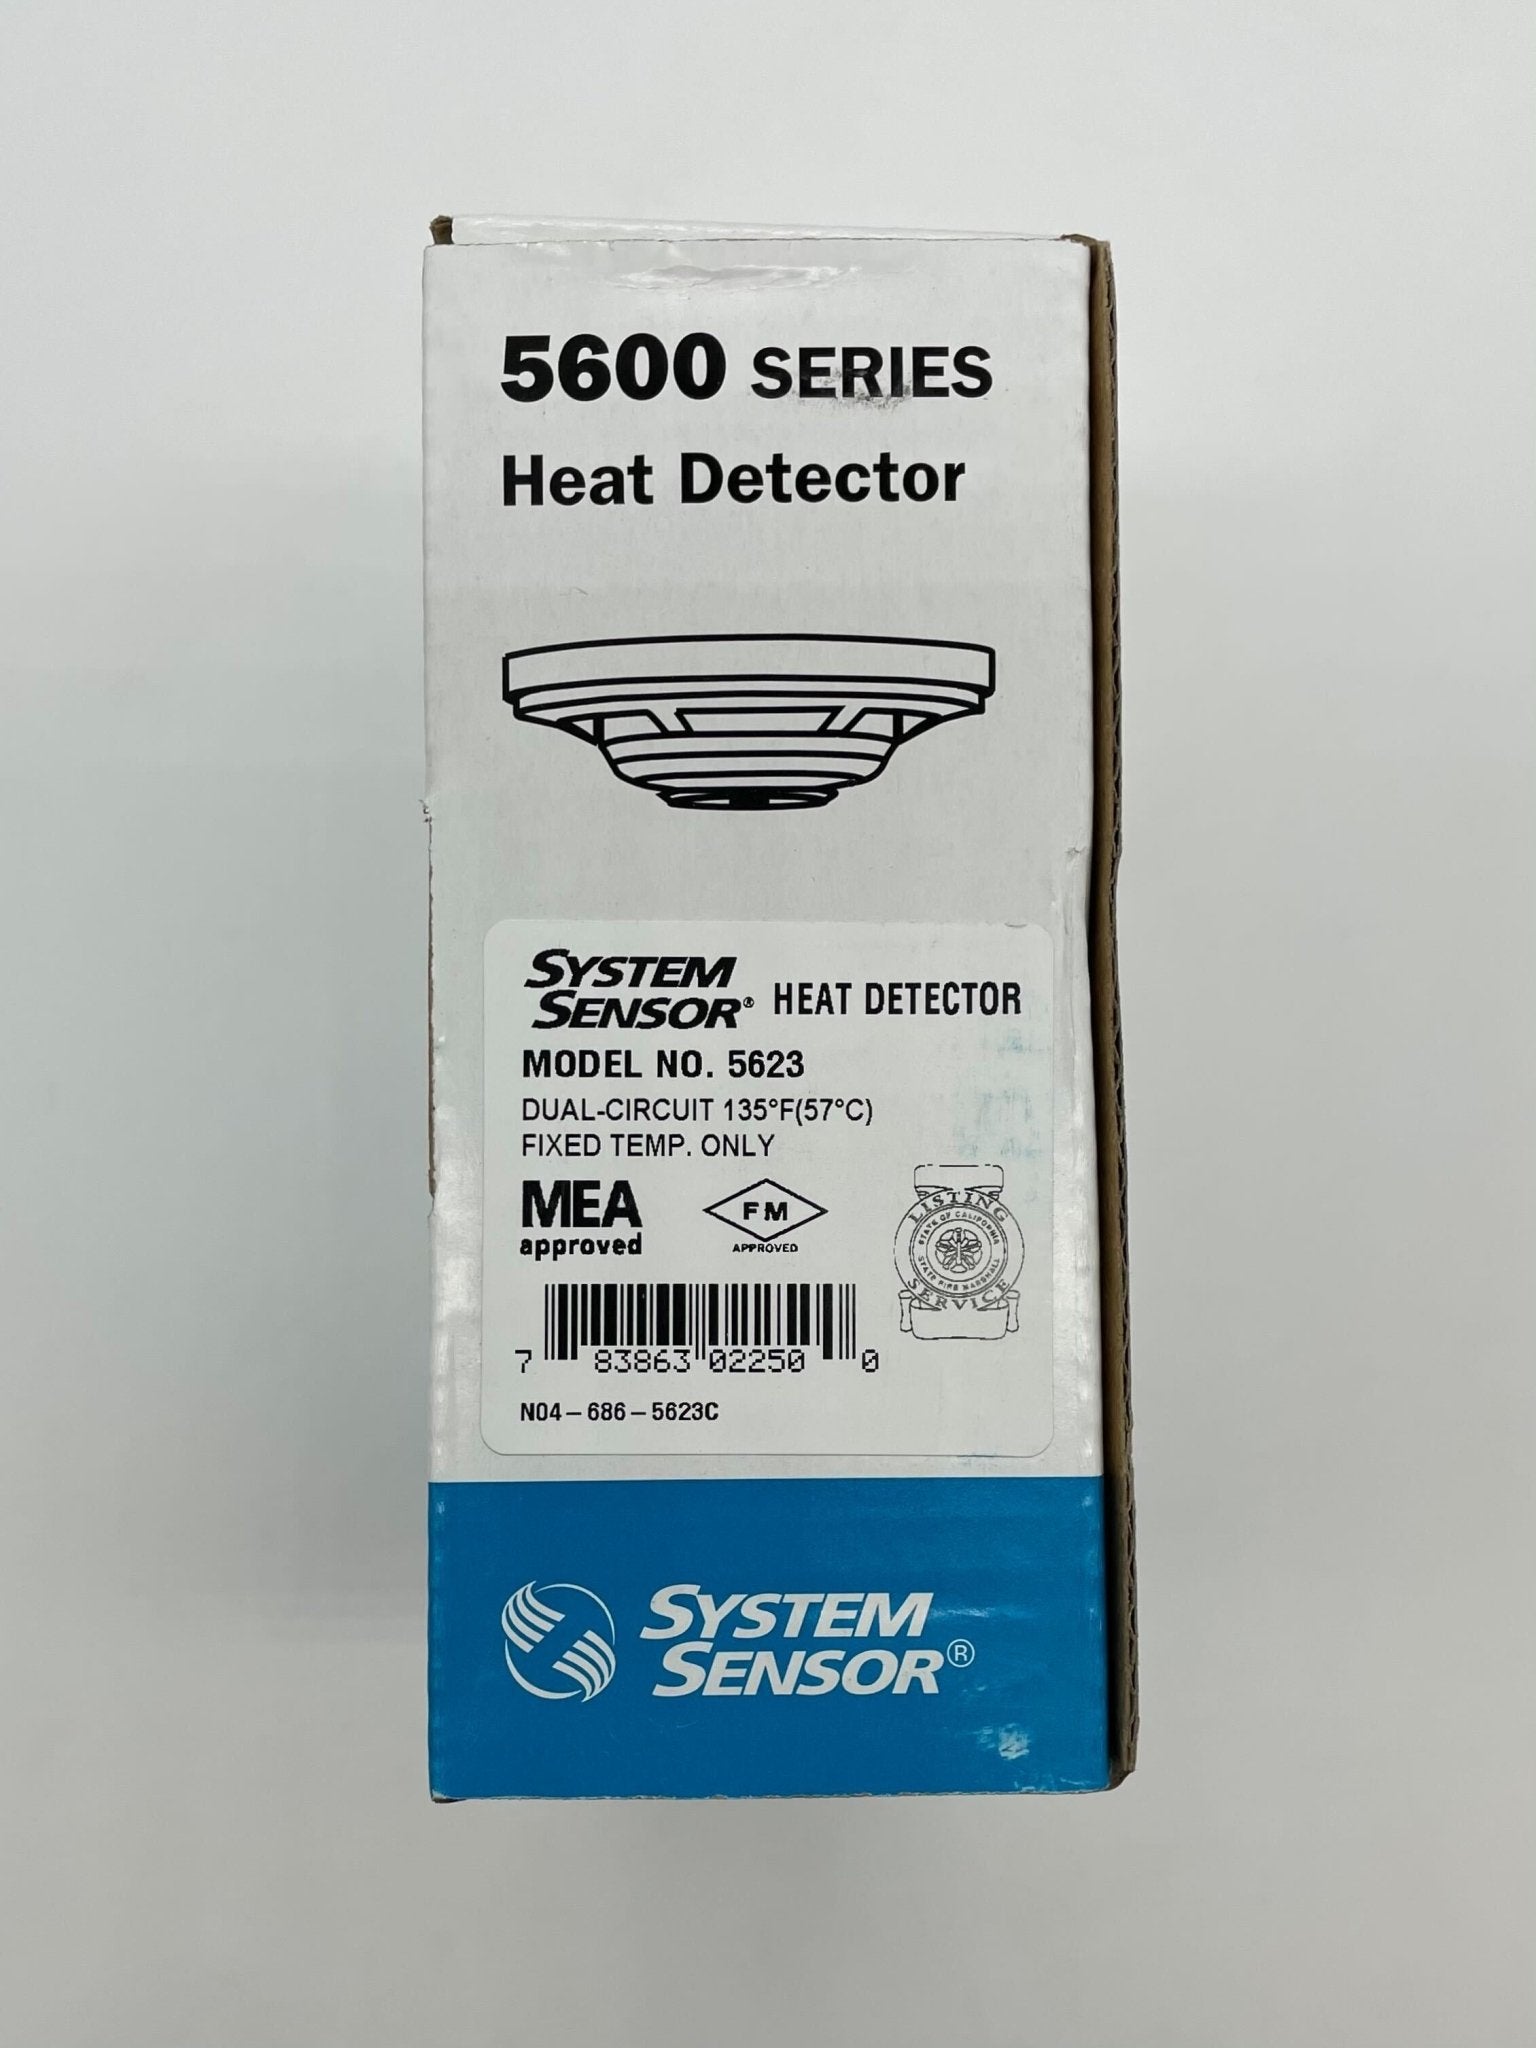 System Sensor 5623 - The Fire Alarm Supplier